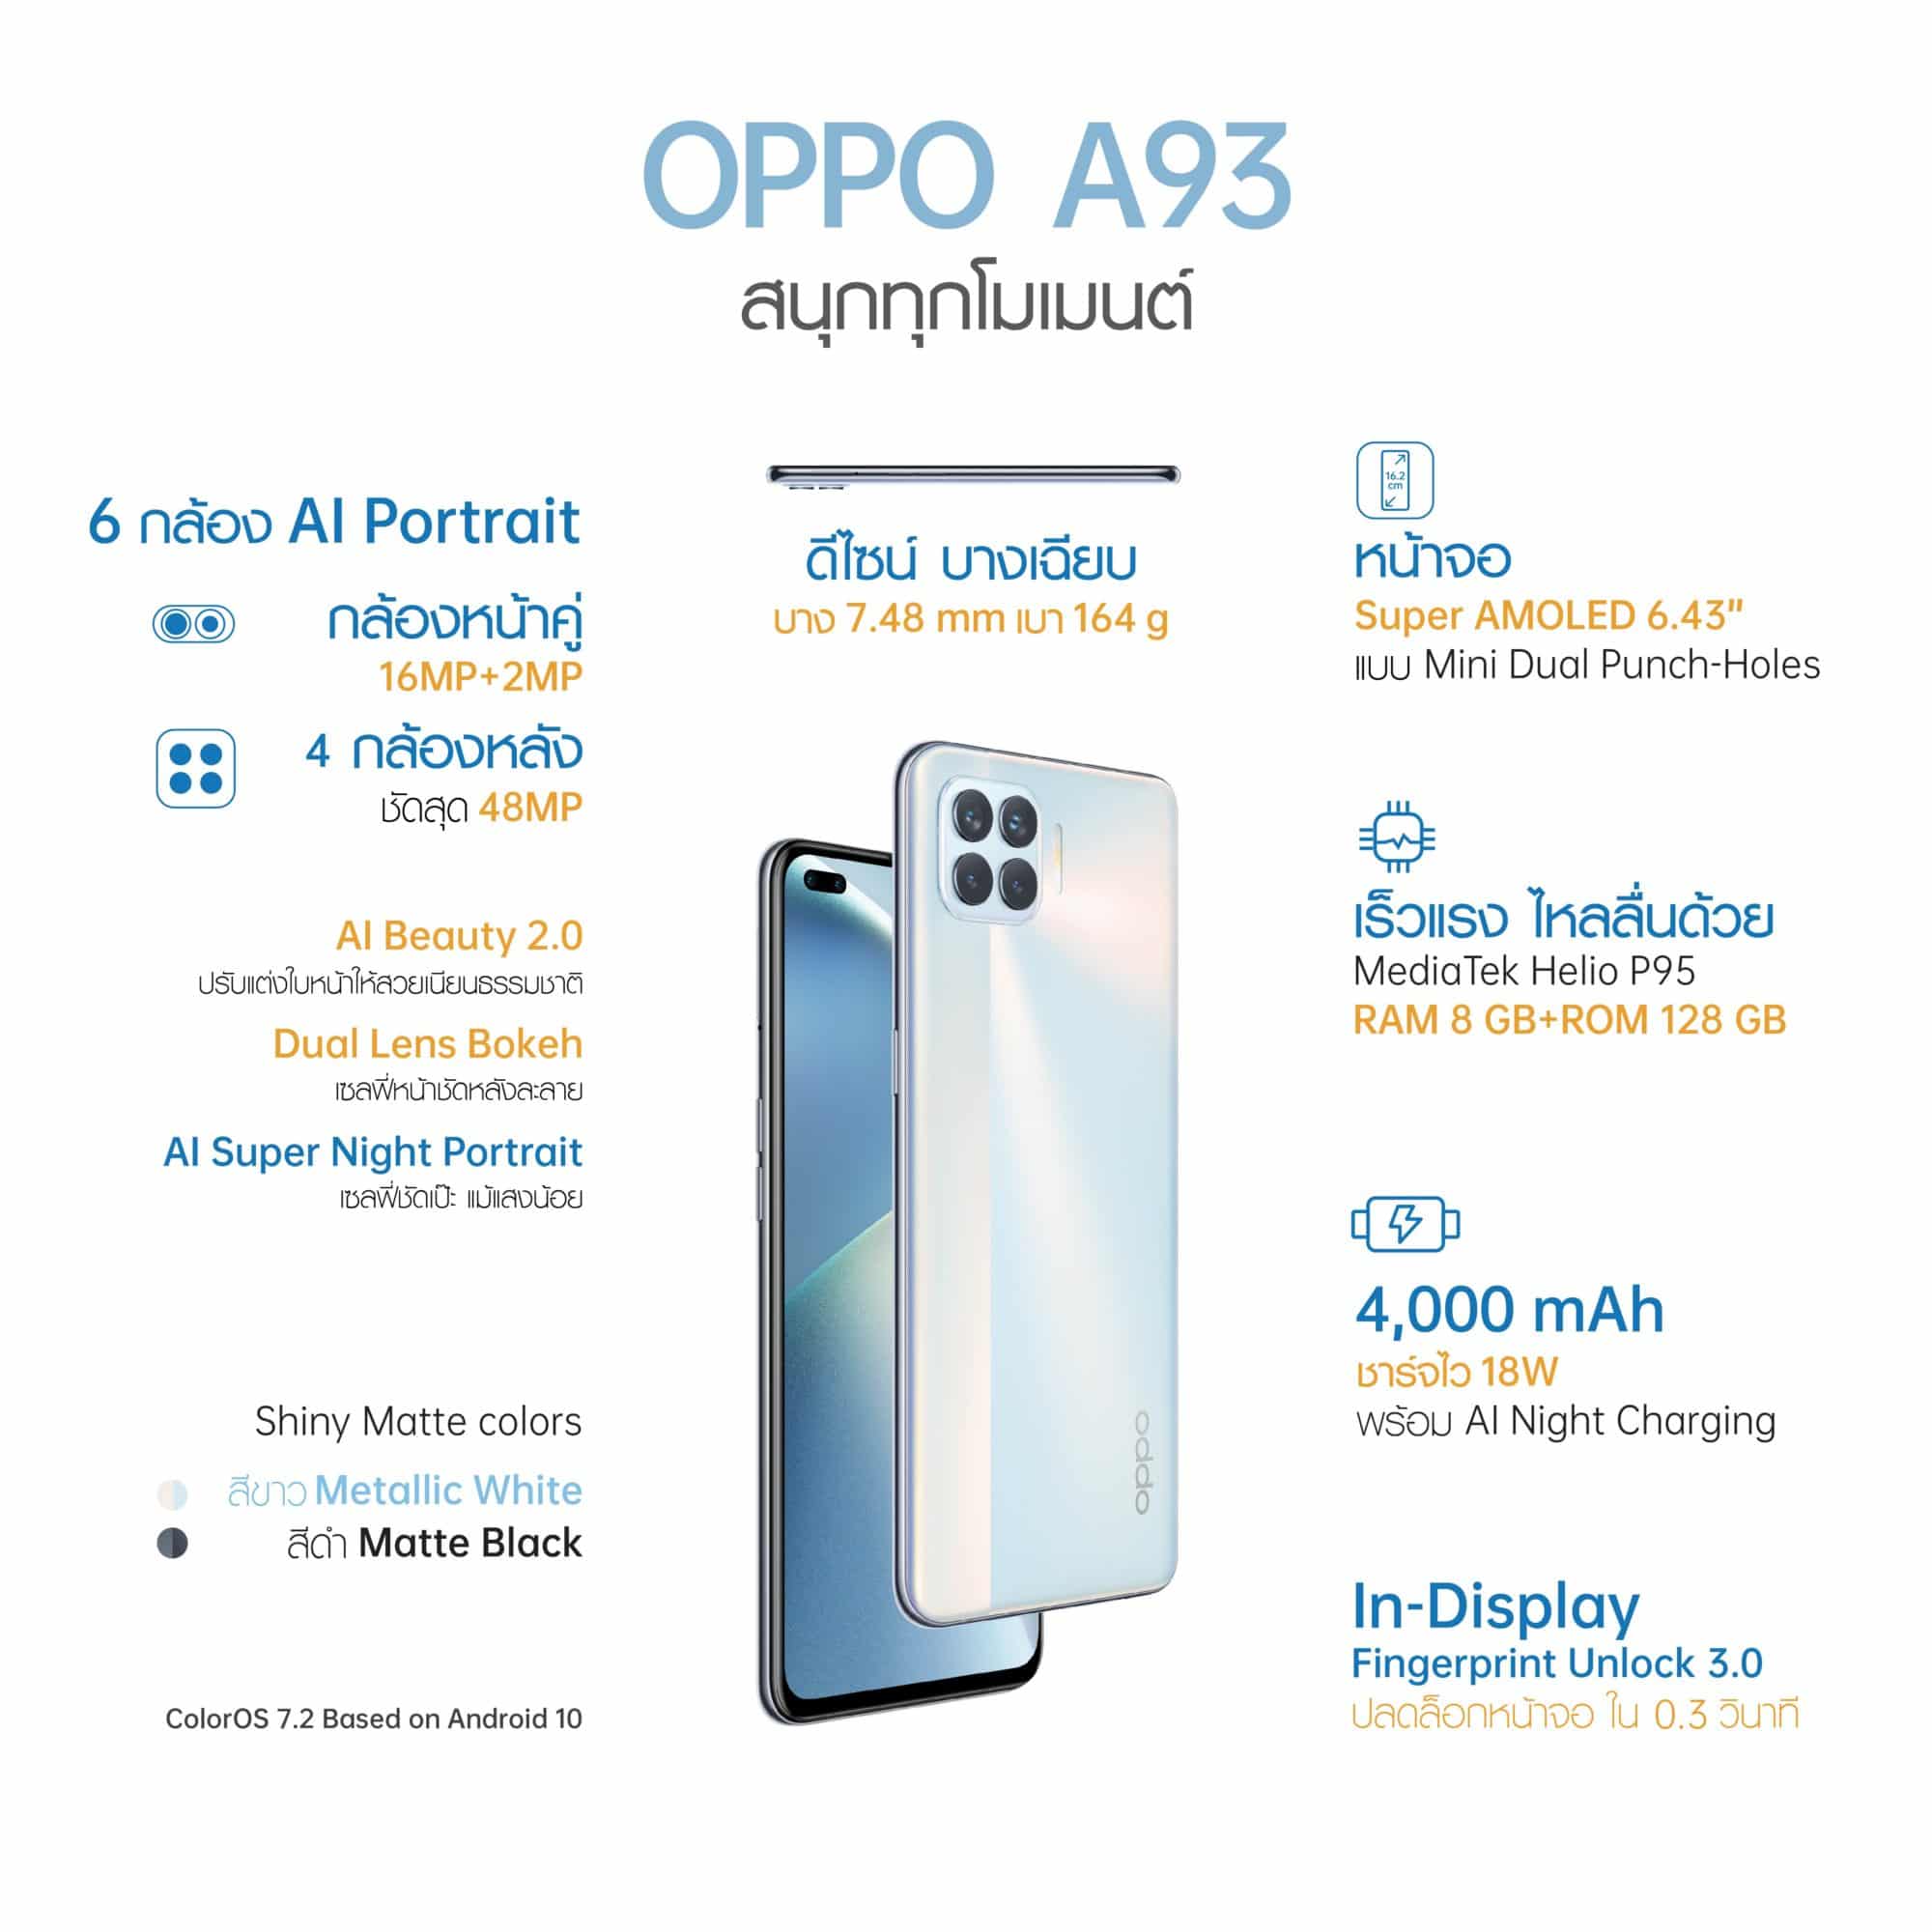 OPPO A93 สมาร์ทโฟนดีไซน์บางเฉียบ พร้อม 6 กล้อง AI Portrait กับยอดขายอันดับ 1 ตั้งแต่เปิดขายวันแรก 3